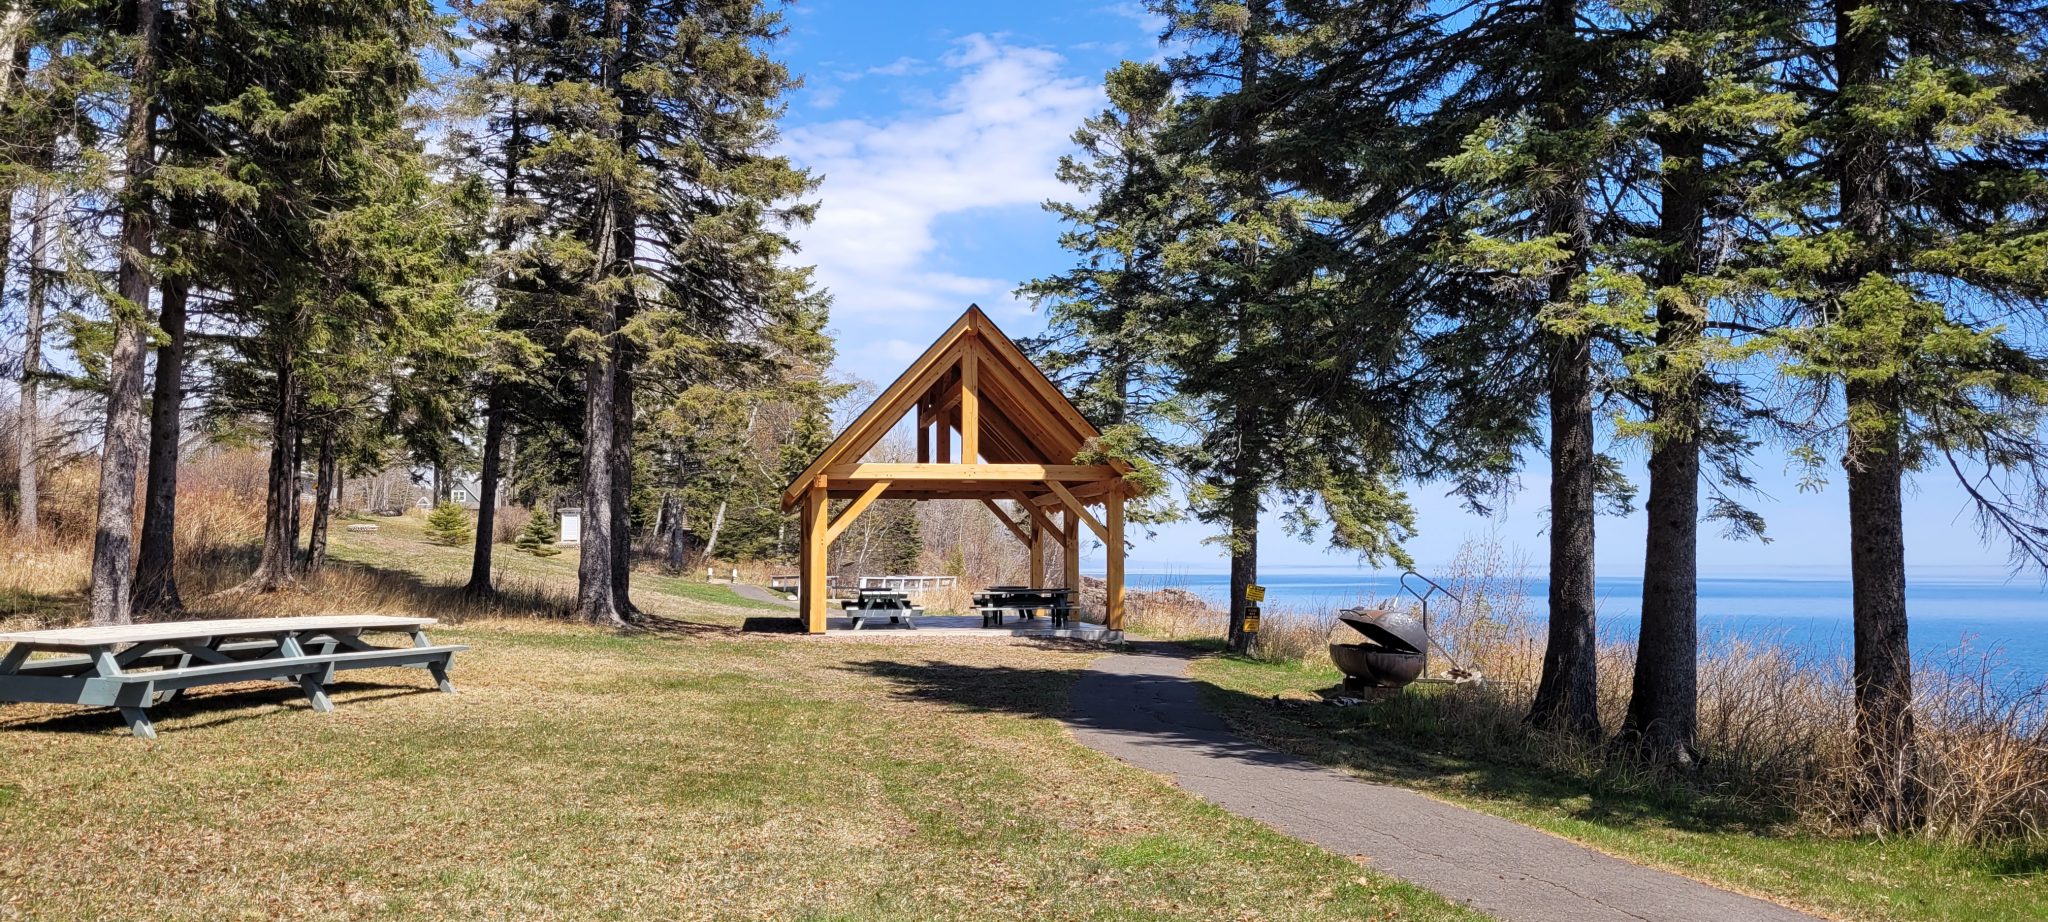 Tofte Park picnic area on Lake Superior